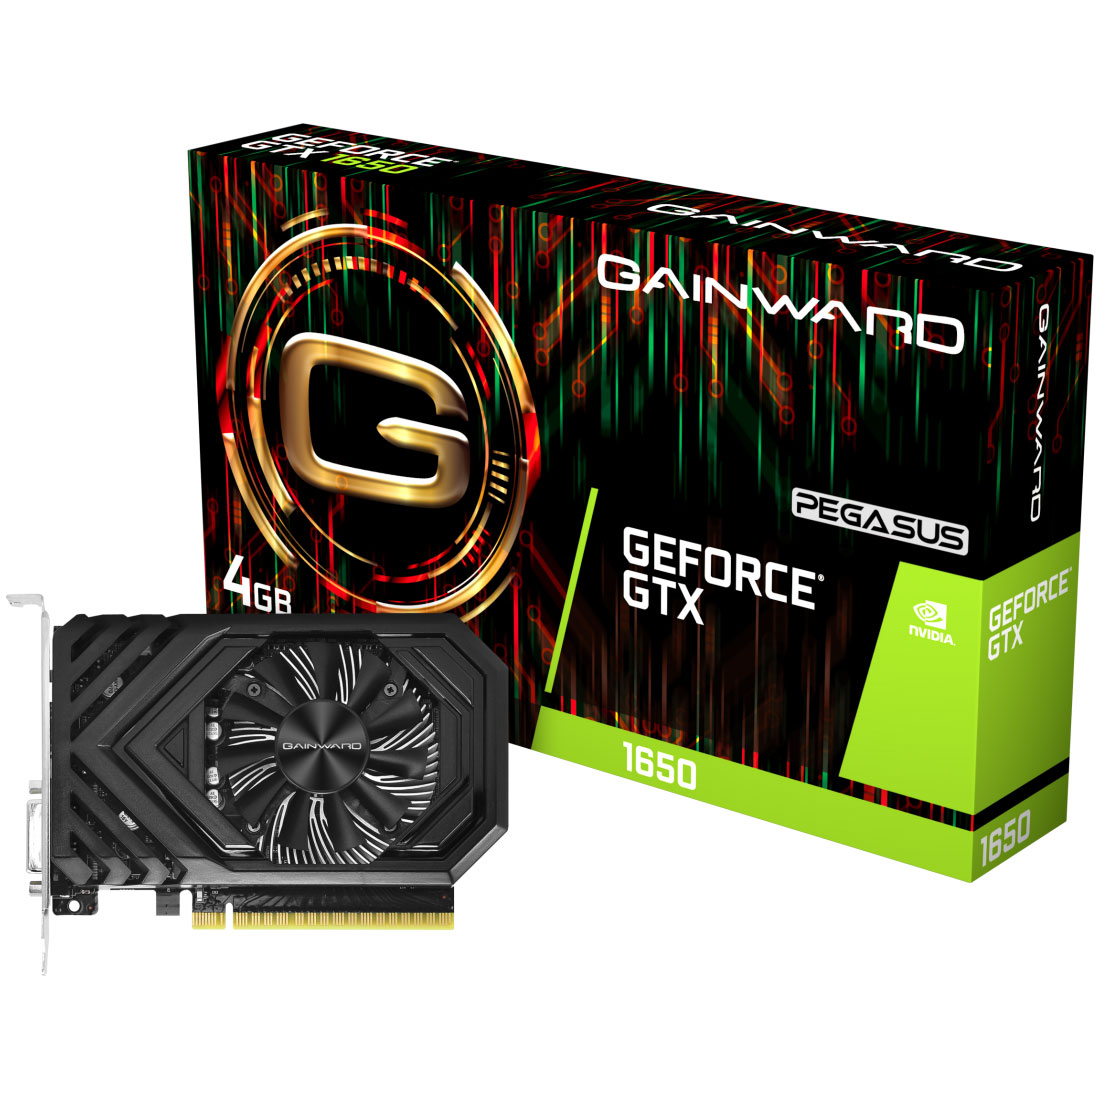 Gainward GeForce GTX 1650 Pegasus 